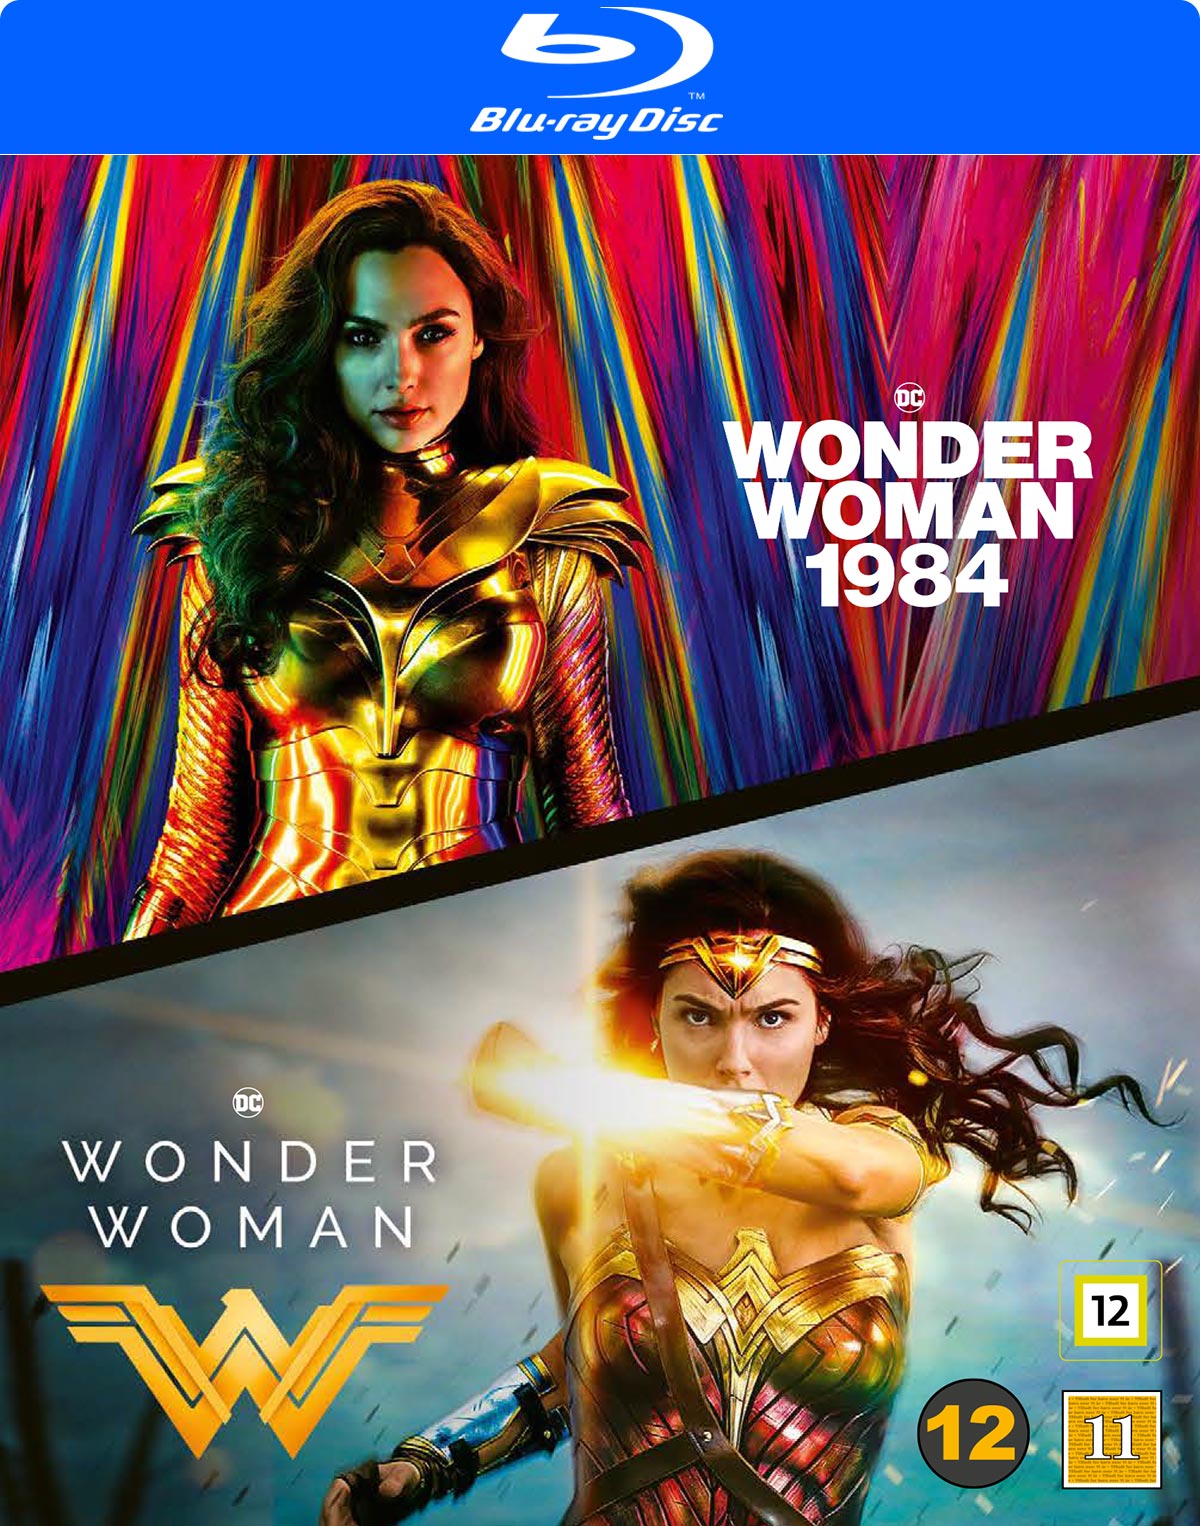 Woman 1+2 film - (2 Blu-ray) - Wonder